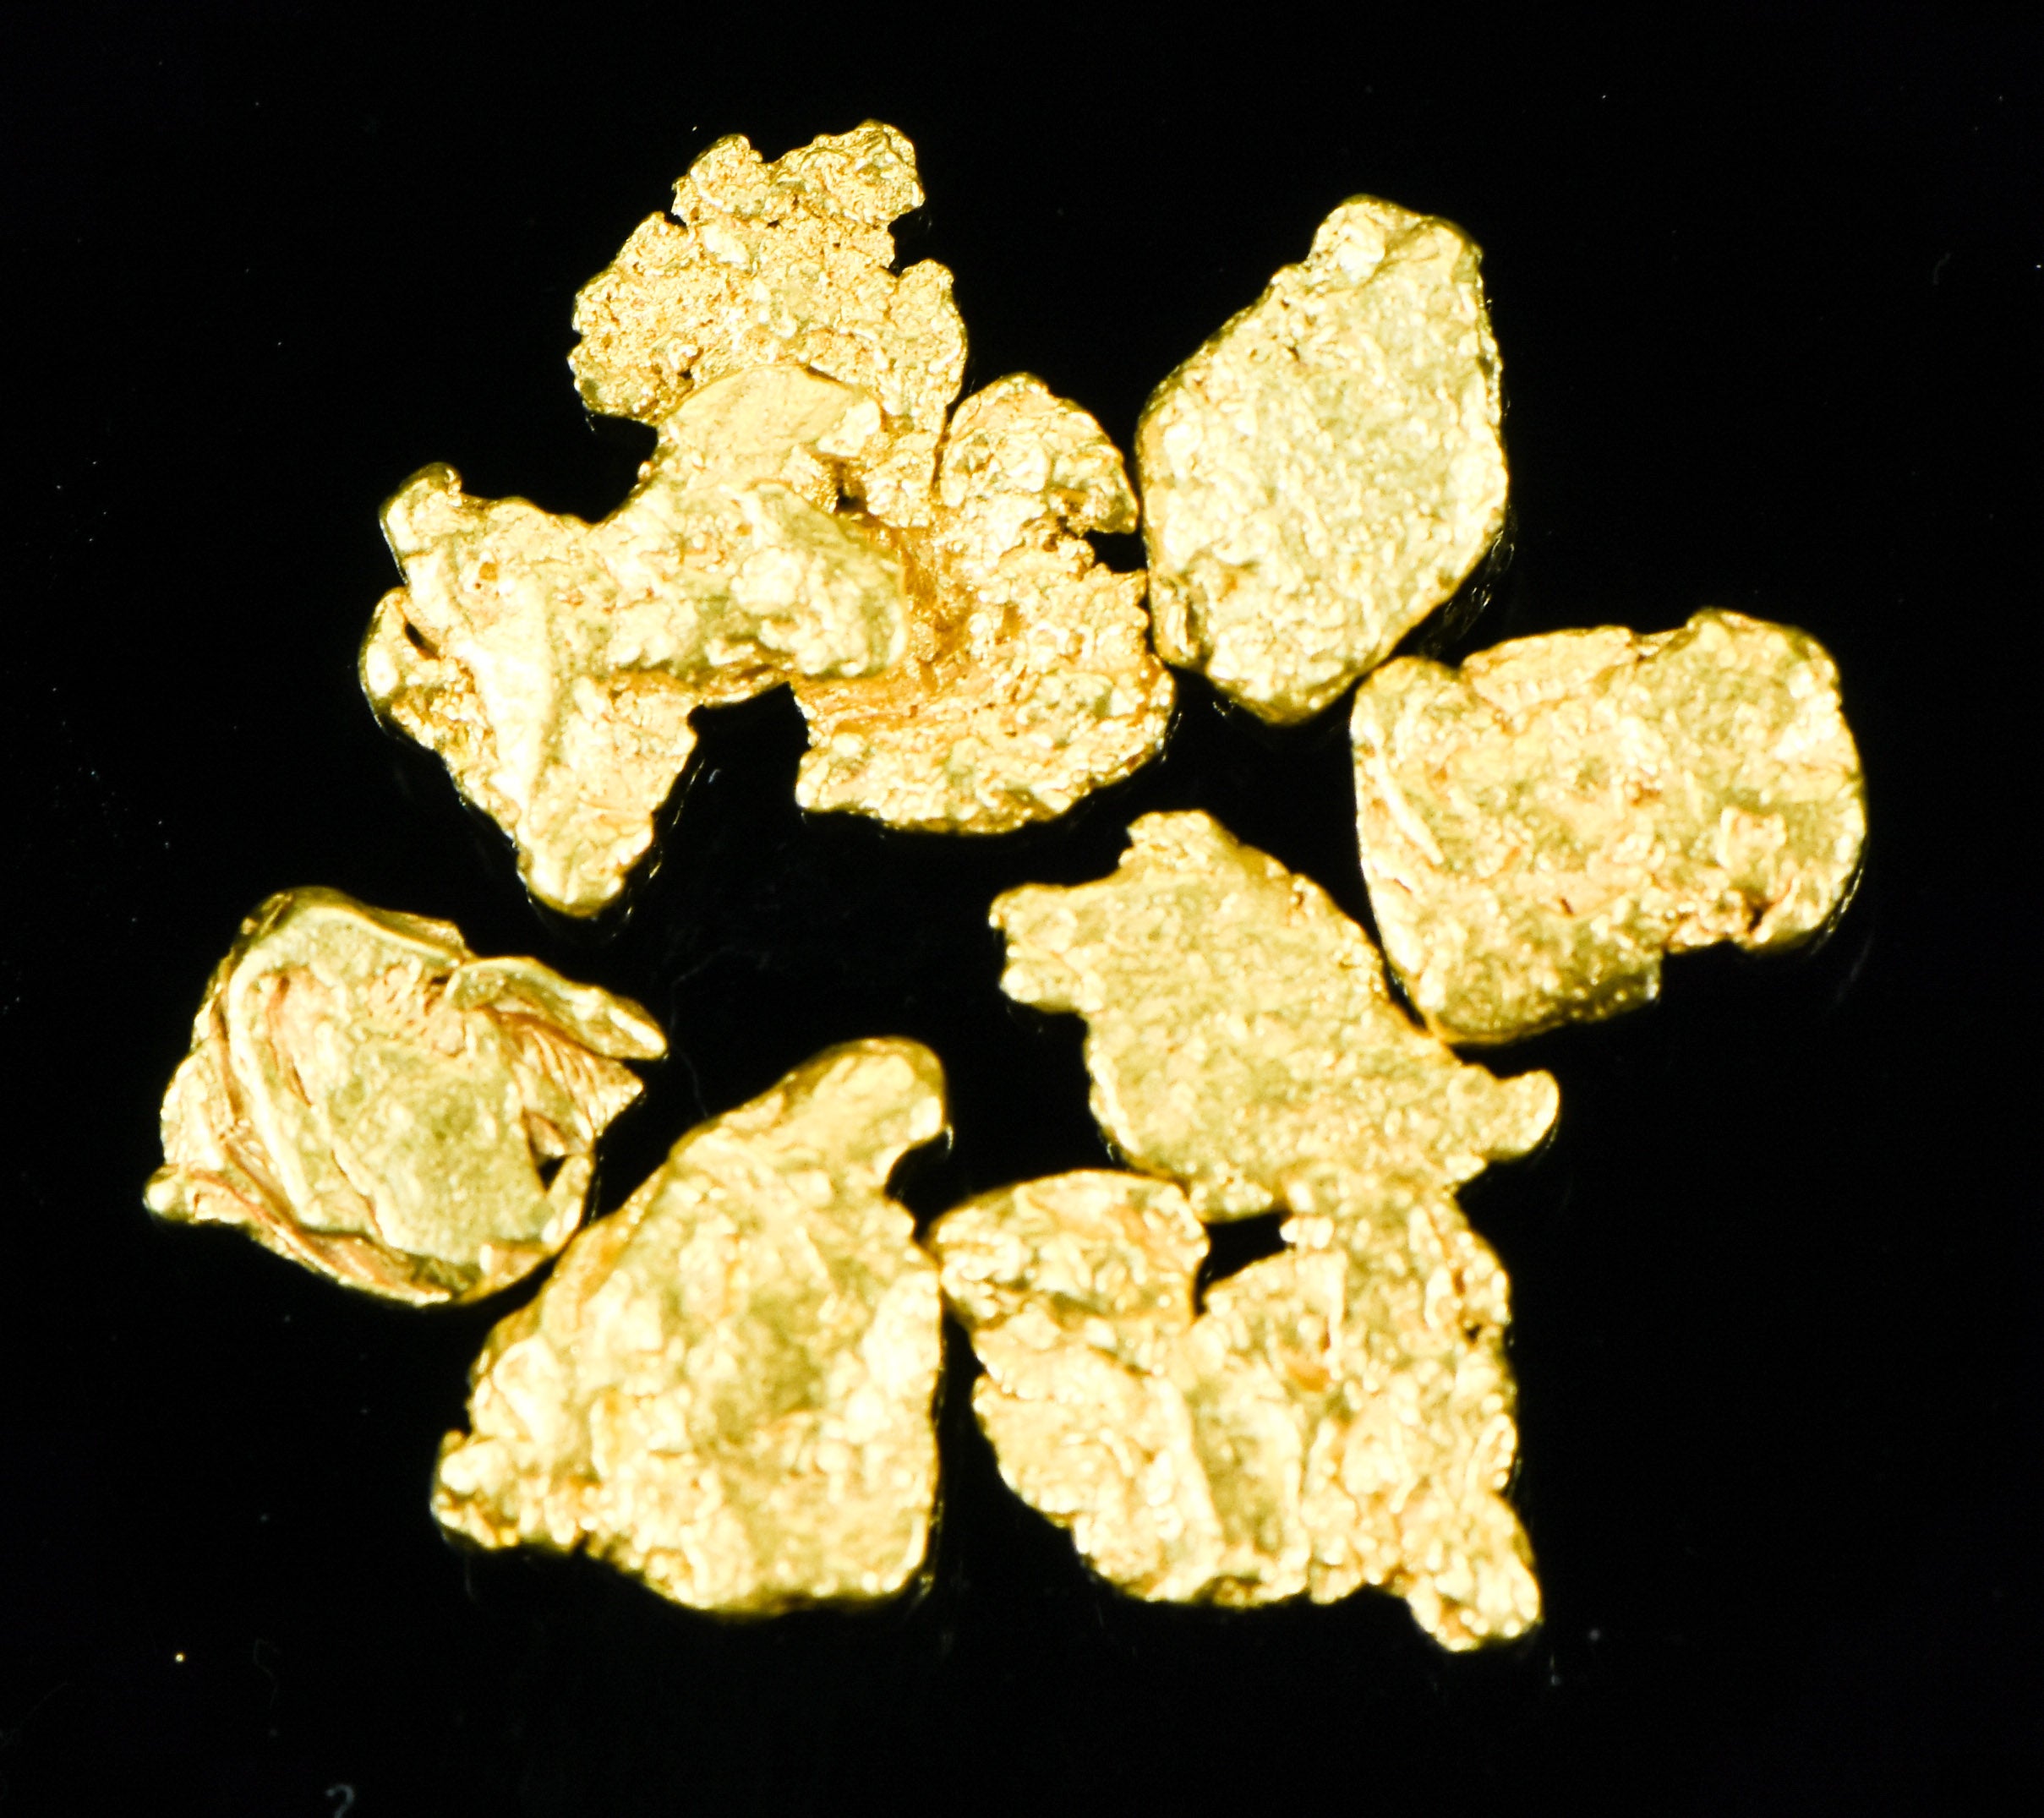 Alaskan Yukon BC Gold Rush Nuggets #6 Mesh 2 Grams of Fines